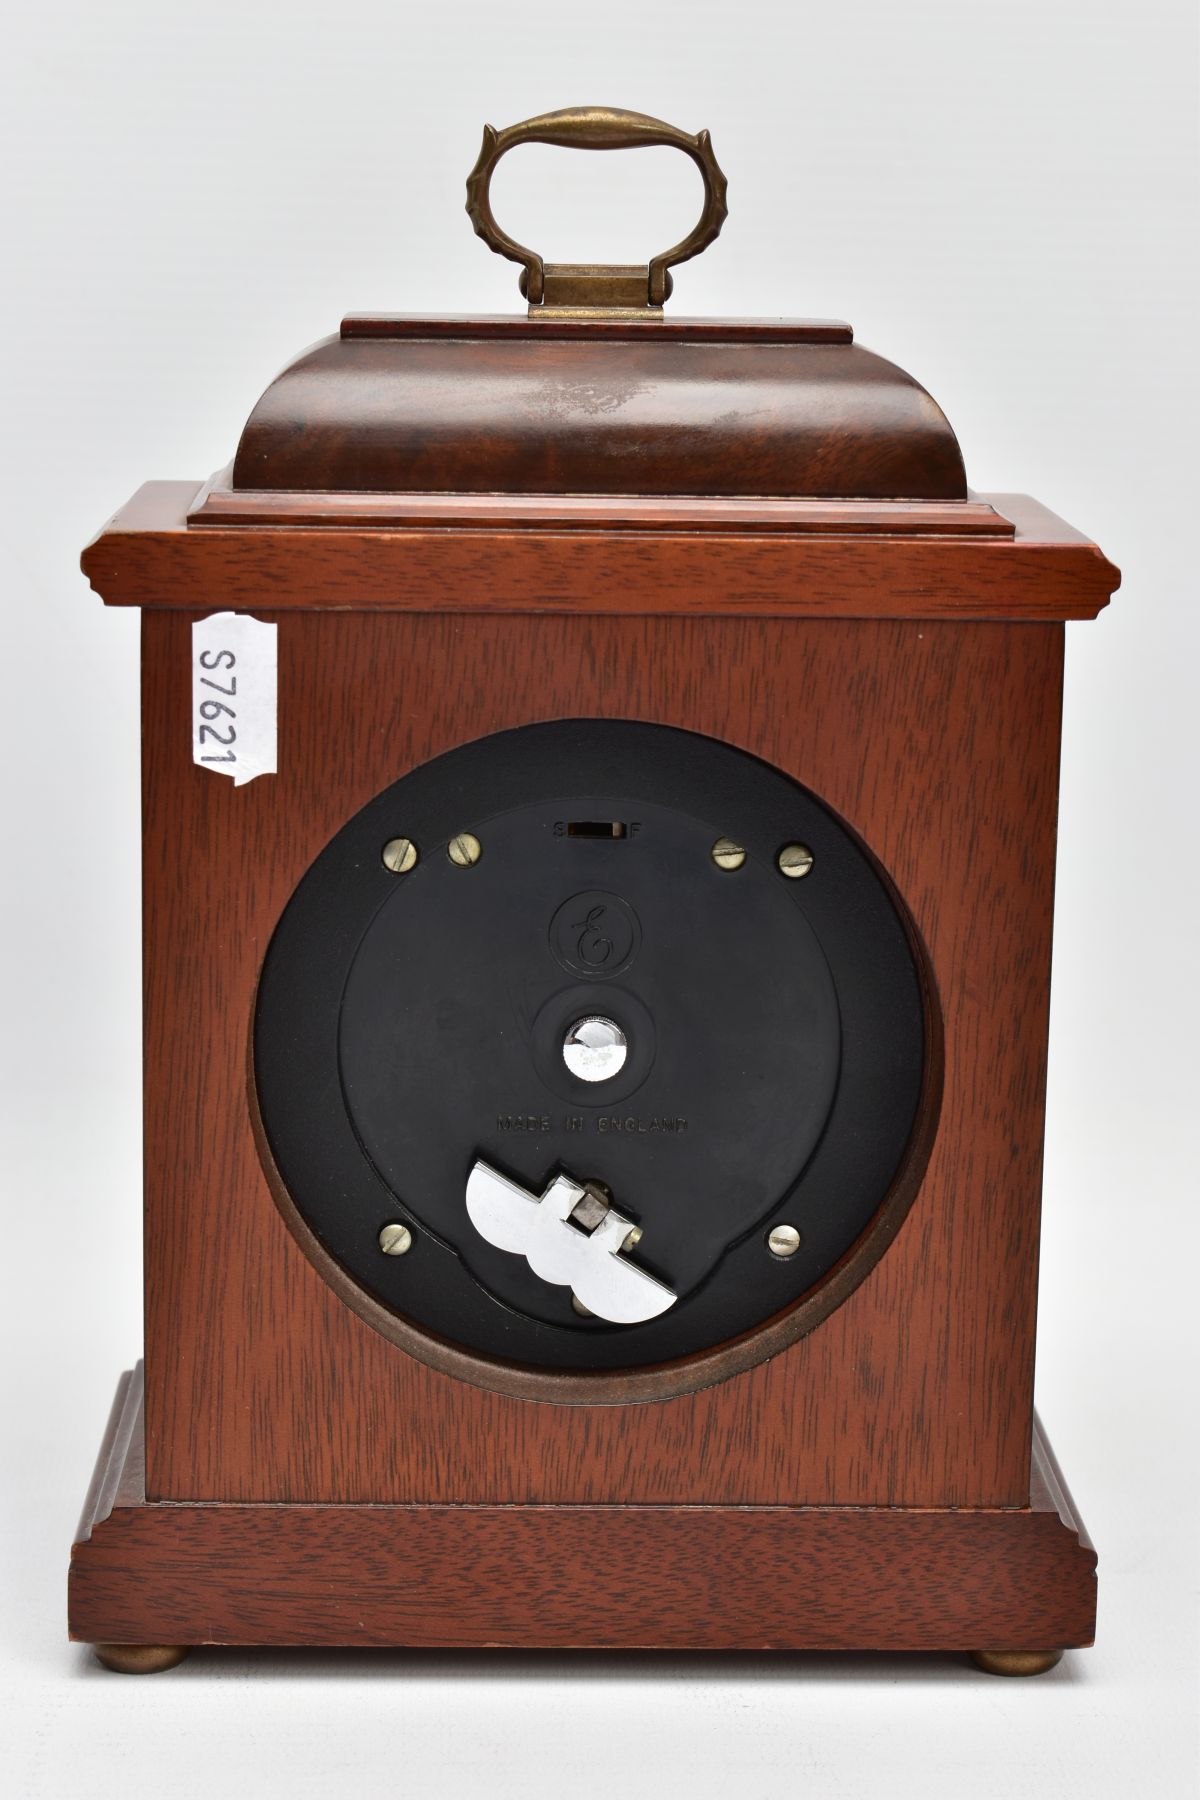 A BURR WOOD CASED GARRARD MANTLE CLOCK, London Elliott mantel clock the silvered ring set with Roman - Image 4 of 6